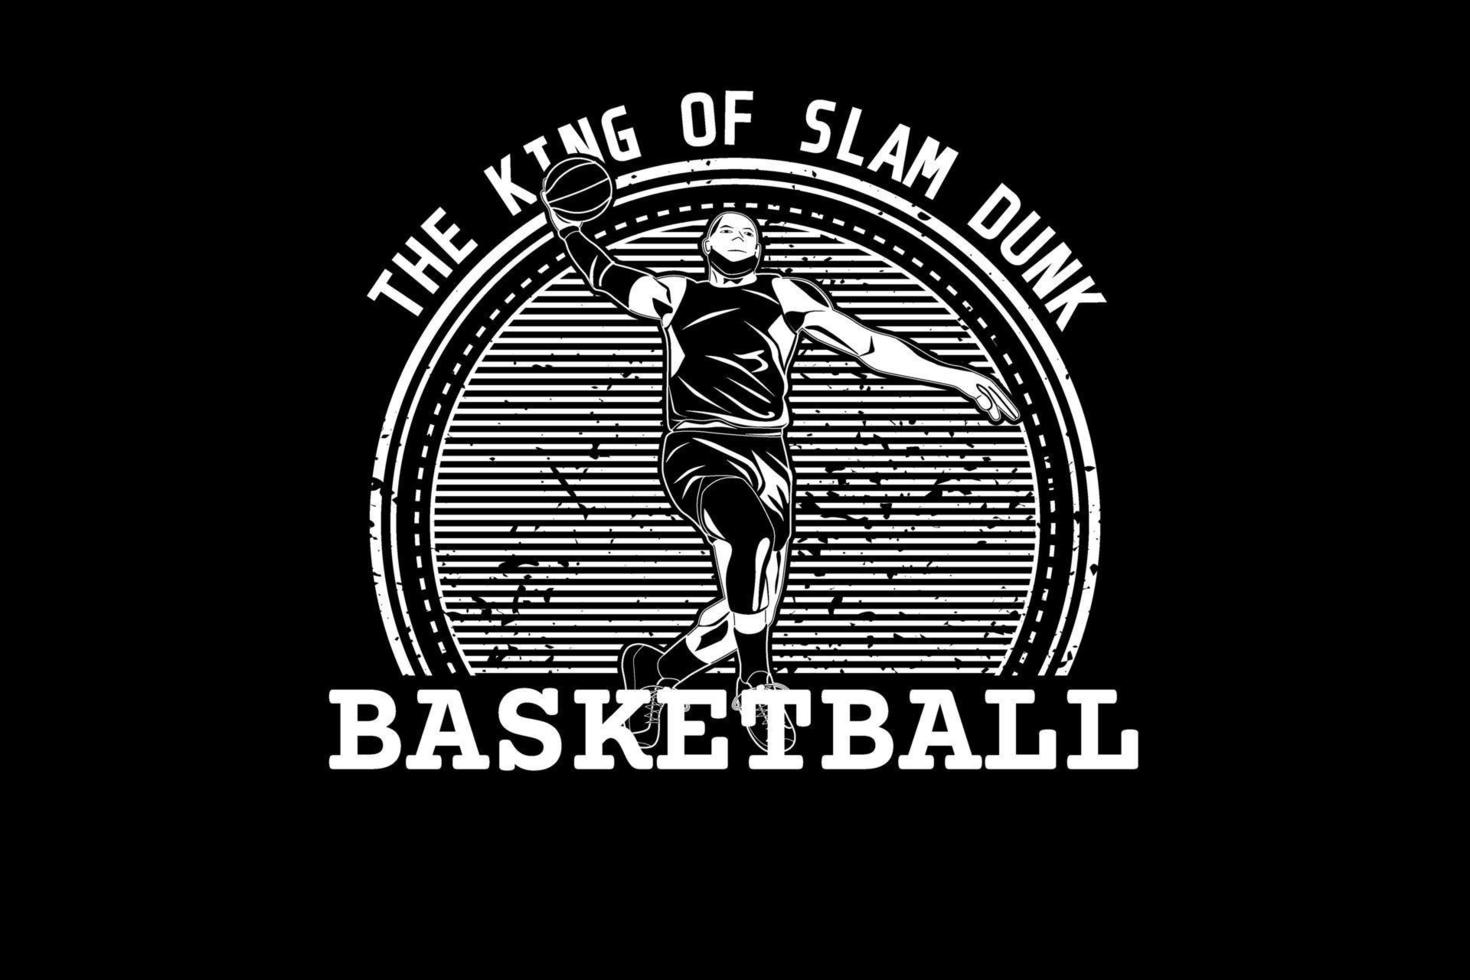 The king of slam dunk Basketball design silhouette vector